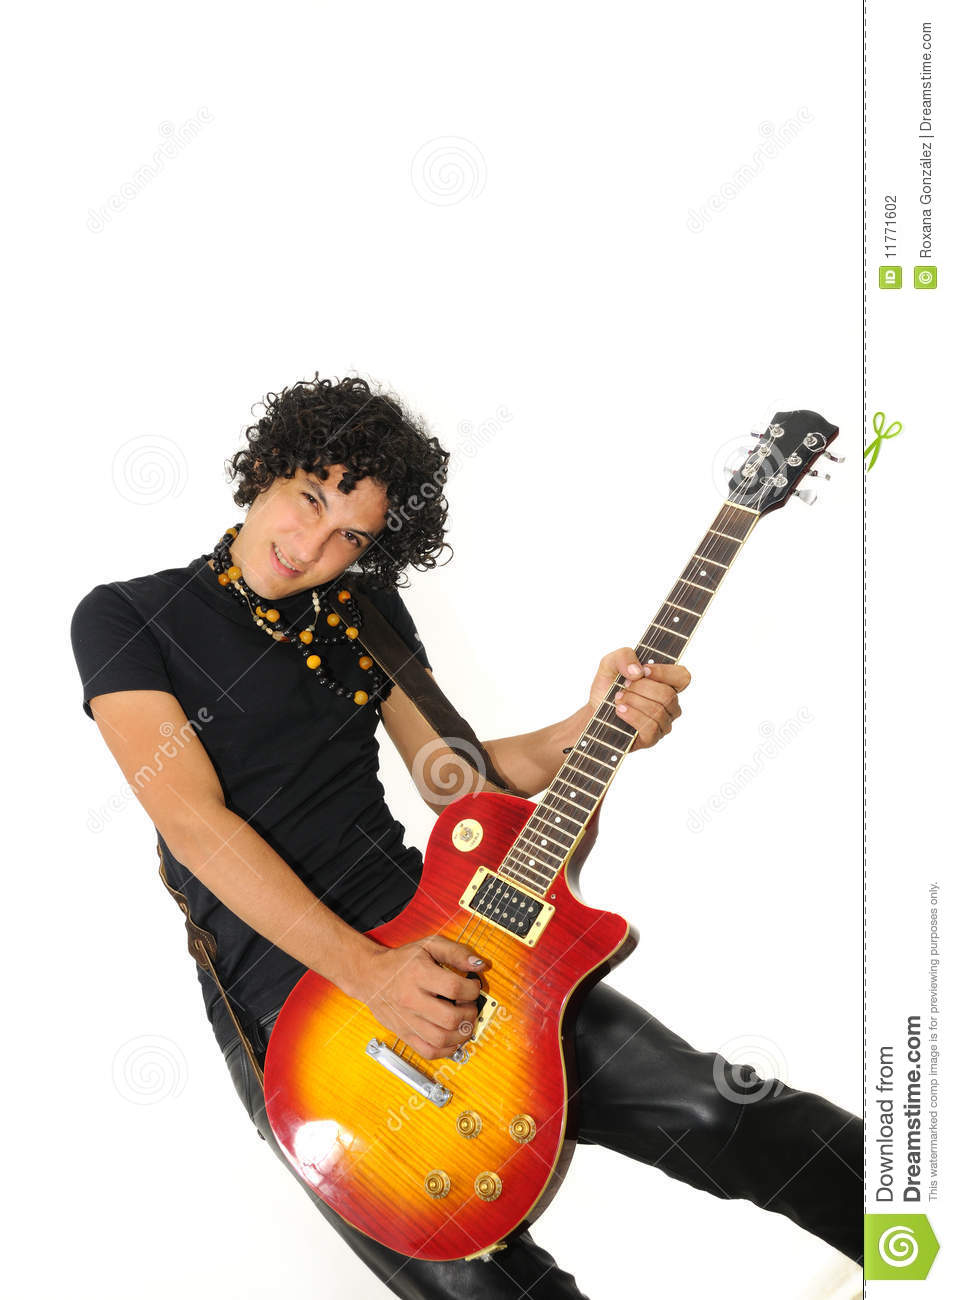 Trendy Hispanic Guy Playing Electric Guitar Stock Photography   Image    